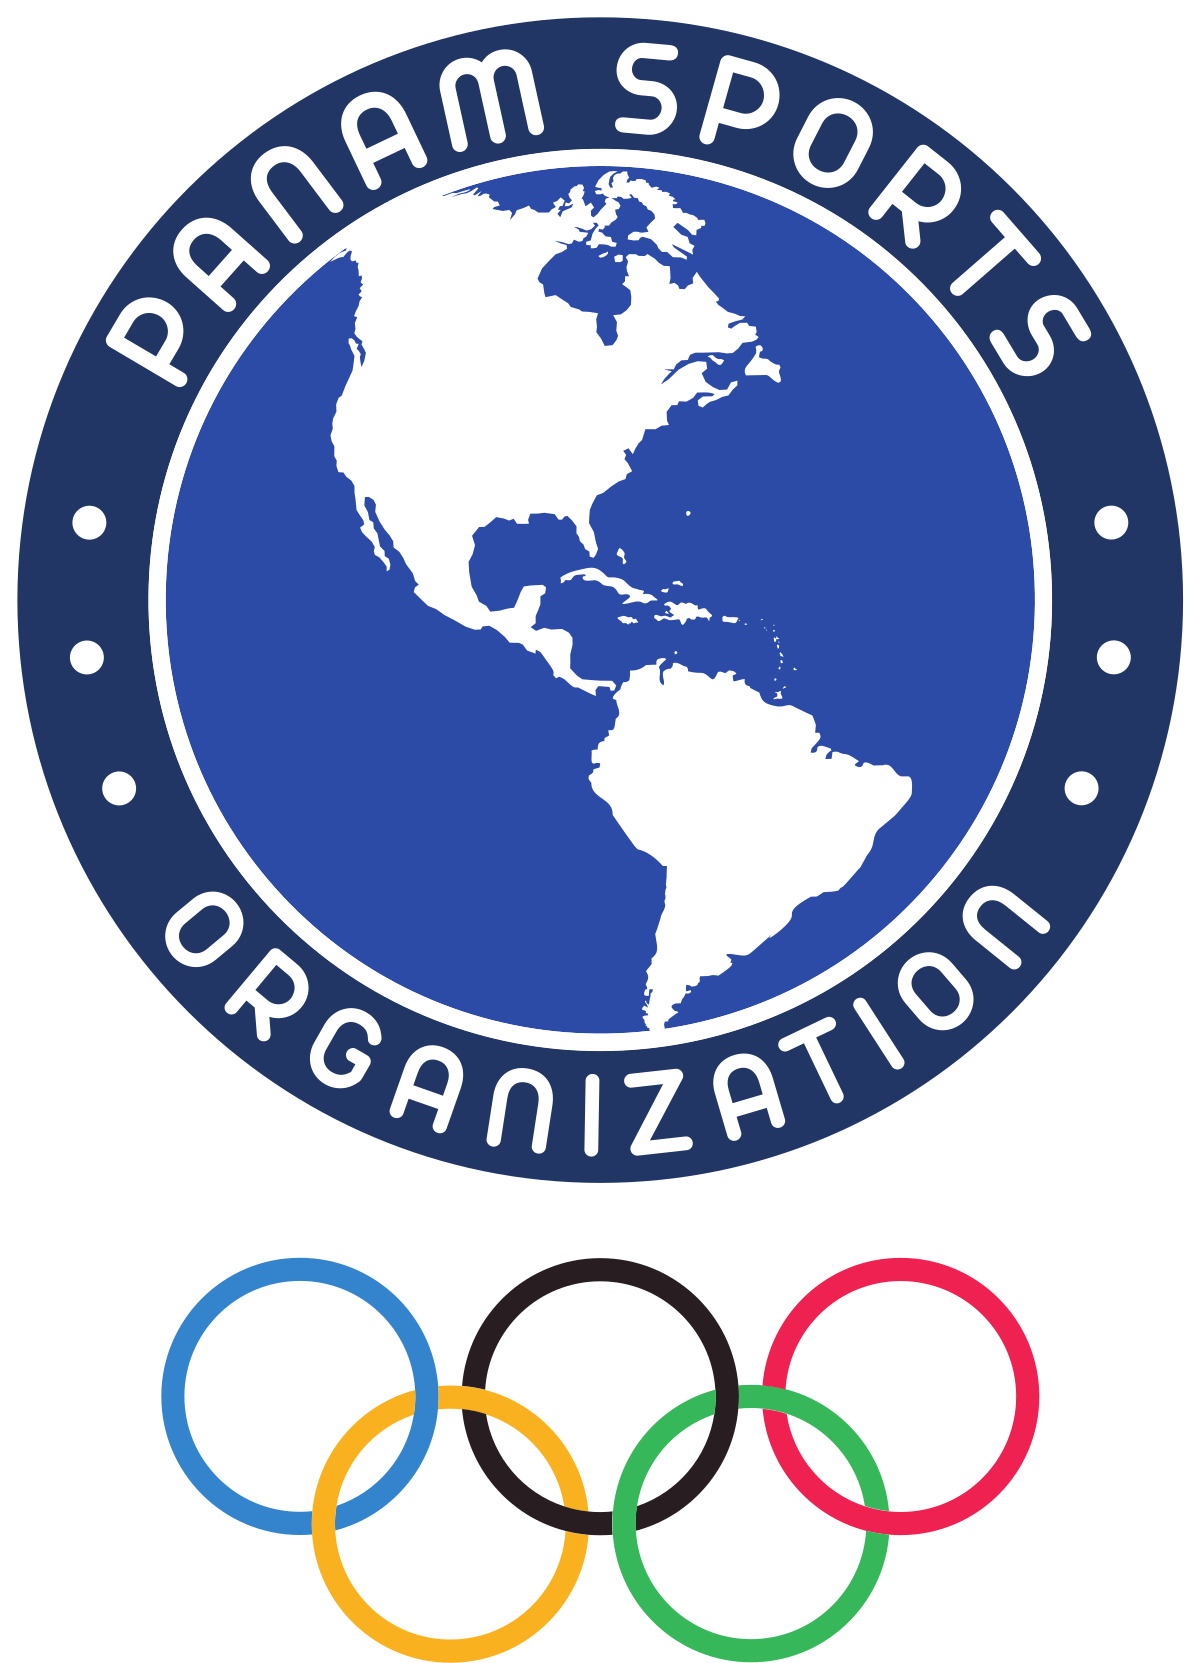 File:Giants Gaming logo.png - Wikipedia